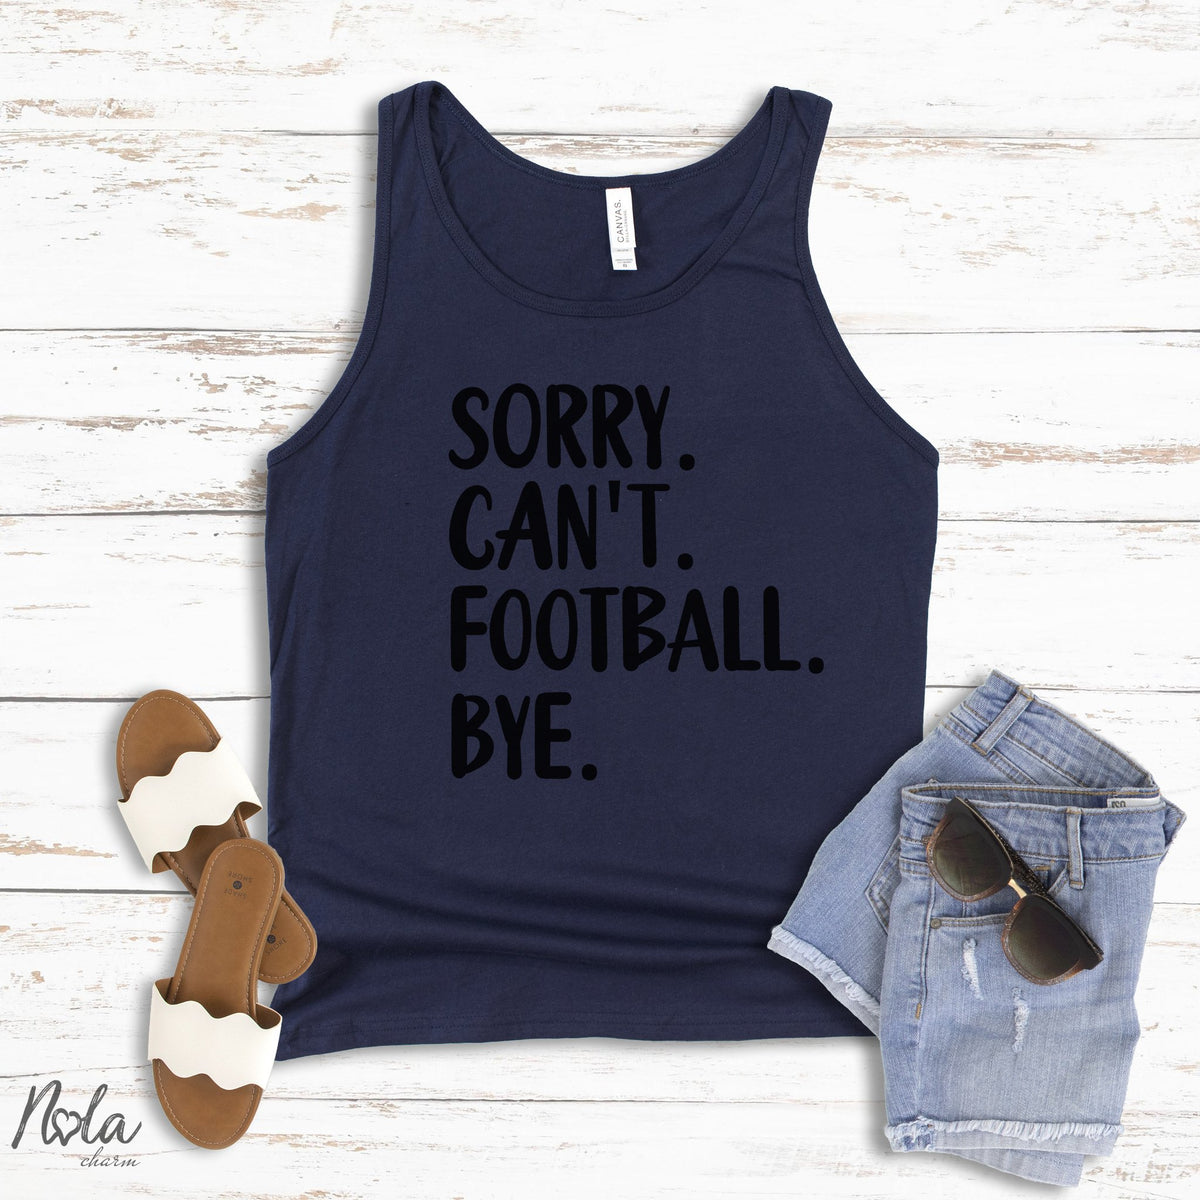 Sorry. Can't. Football. Bye. - Nola Charm